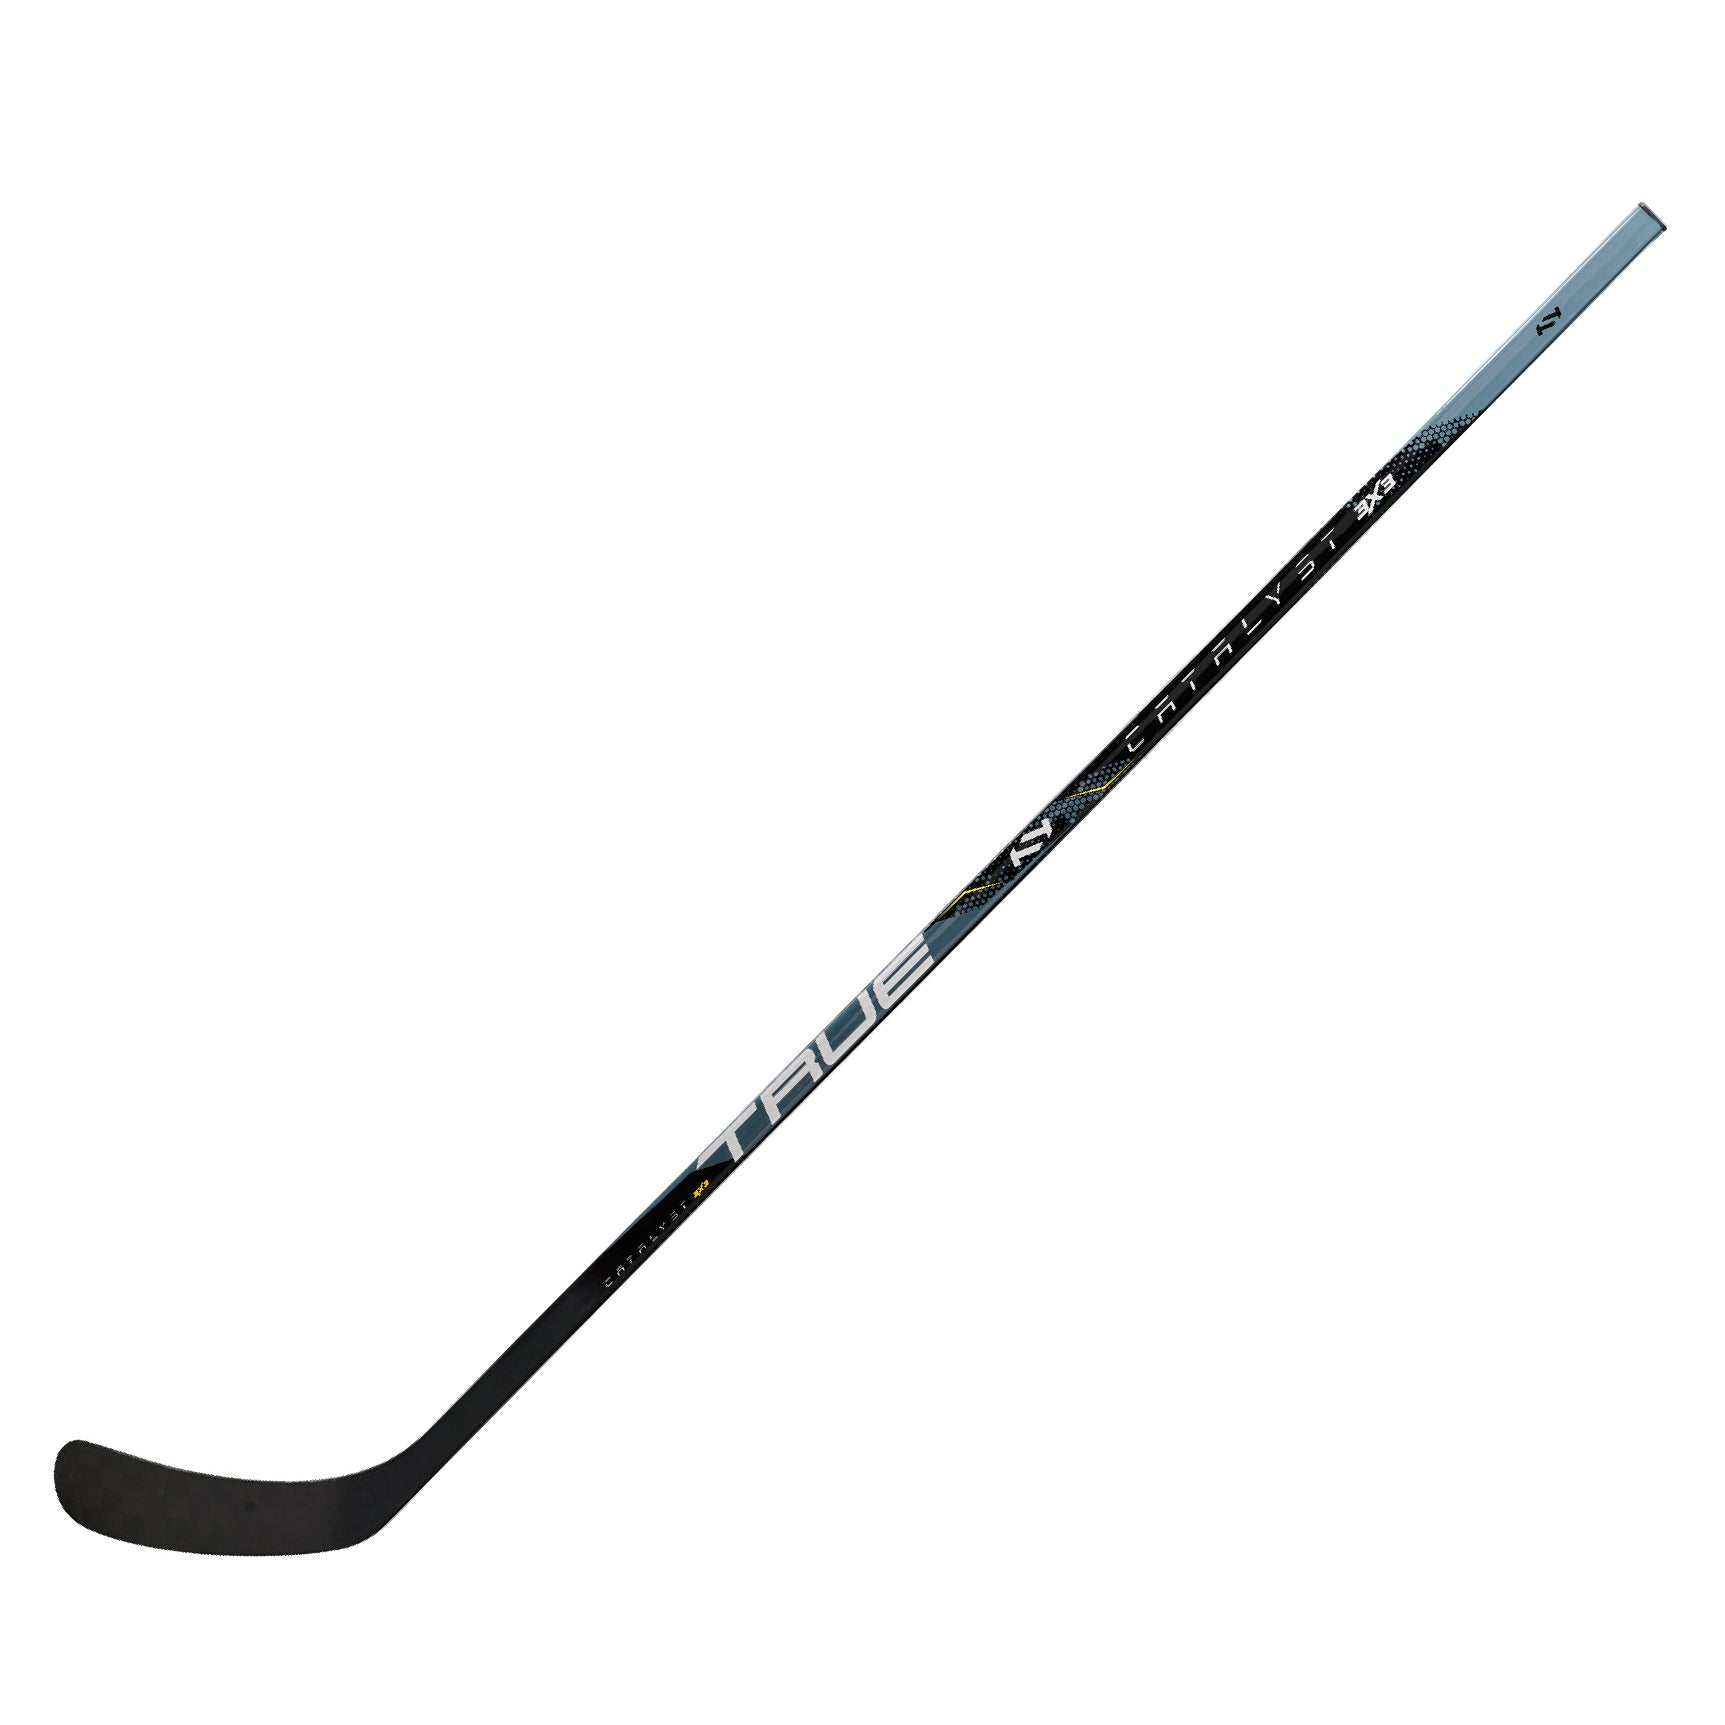 True Catalyst 3X3 Intermediate Hockey Stick